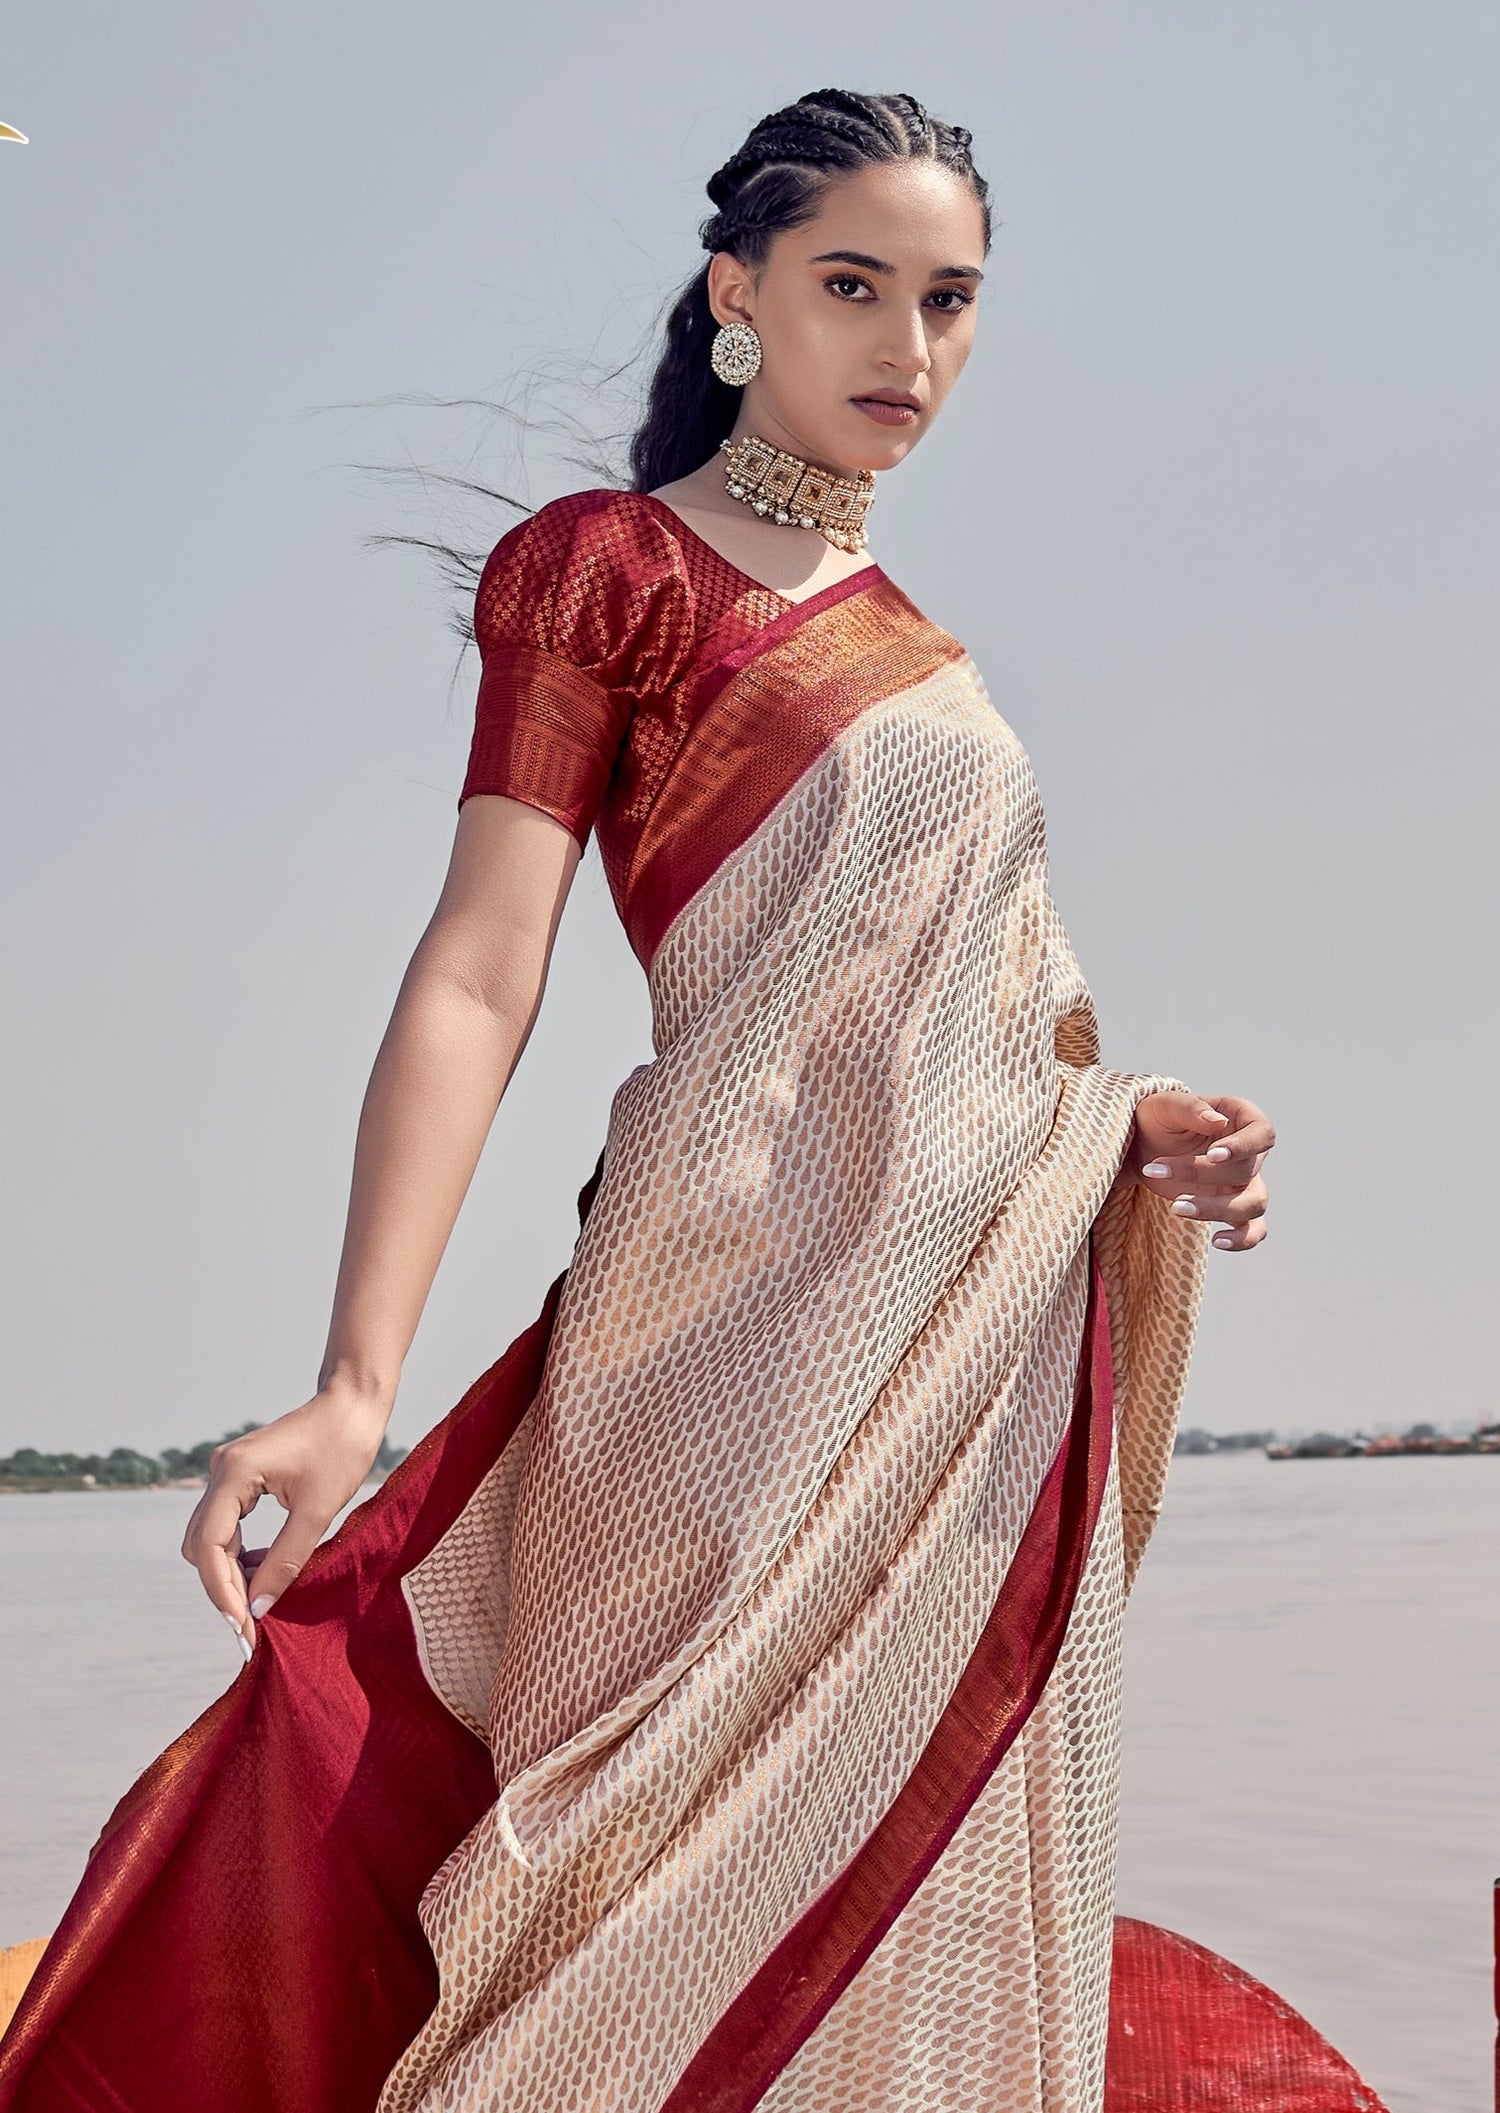 Buy Off-White & Gold Dual Tone Floral Motif Zari Woven Kanchipuram Tissue Silk  Saree Online | Samyakk